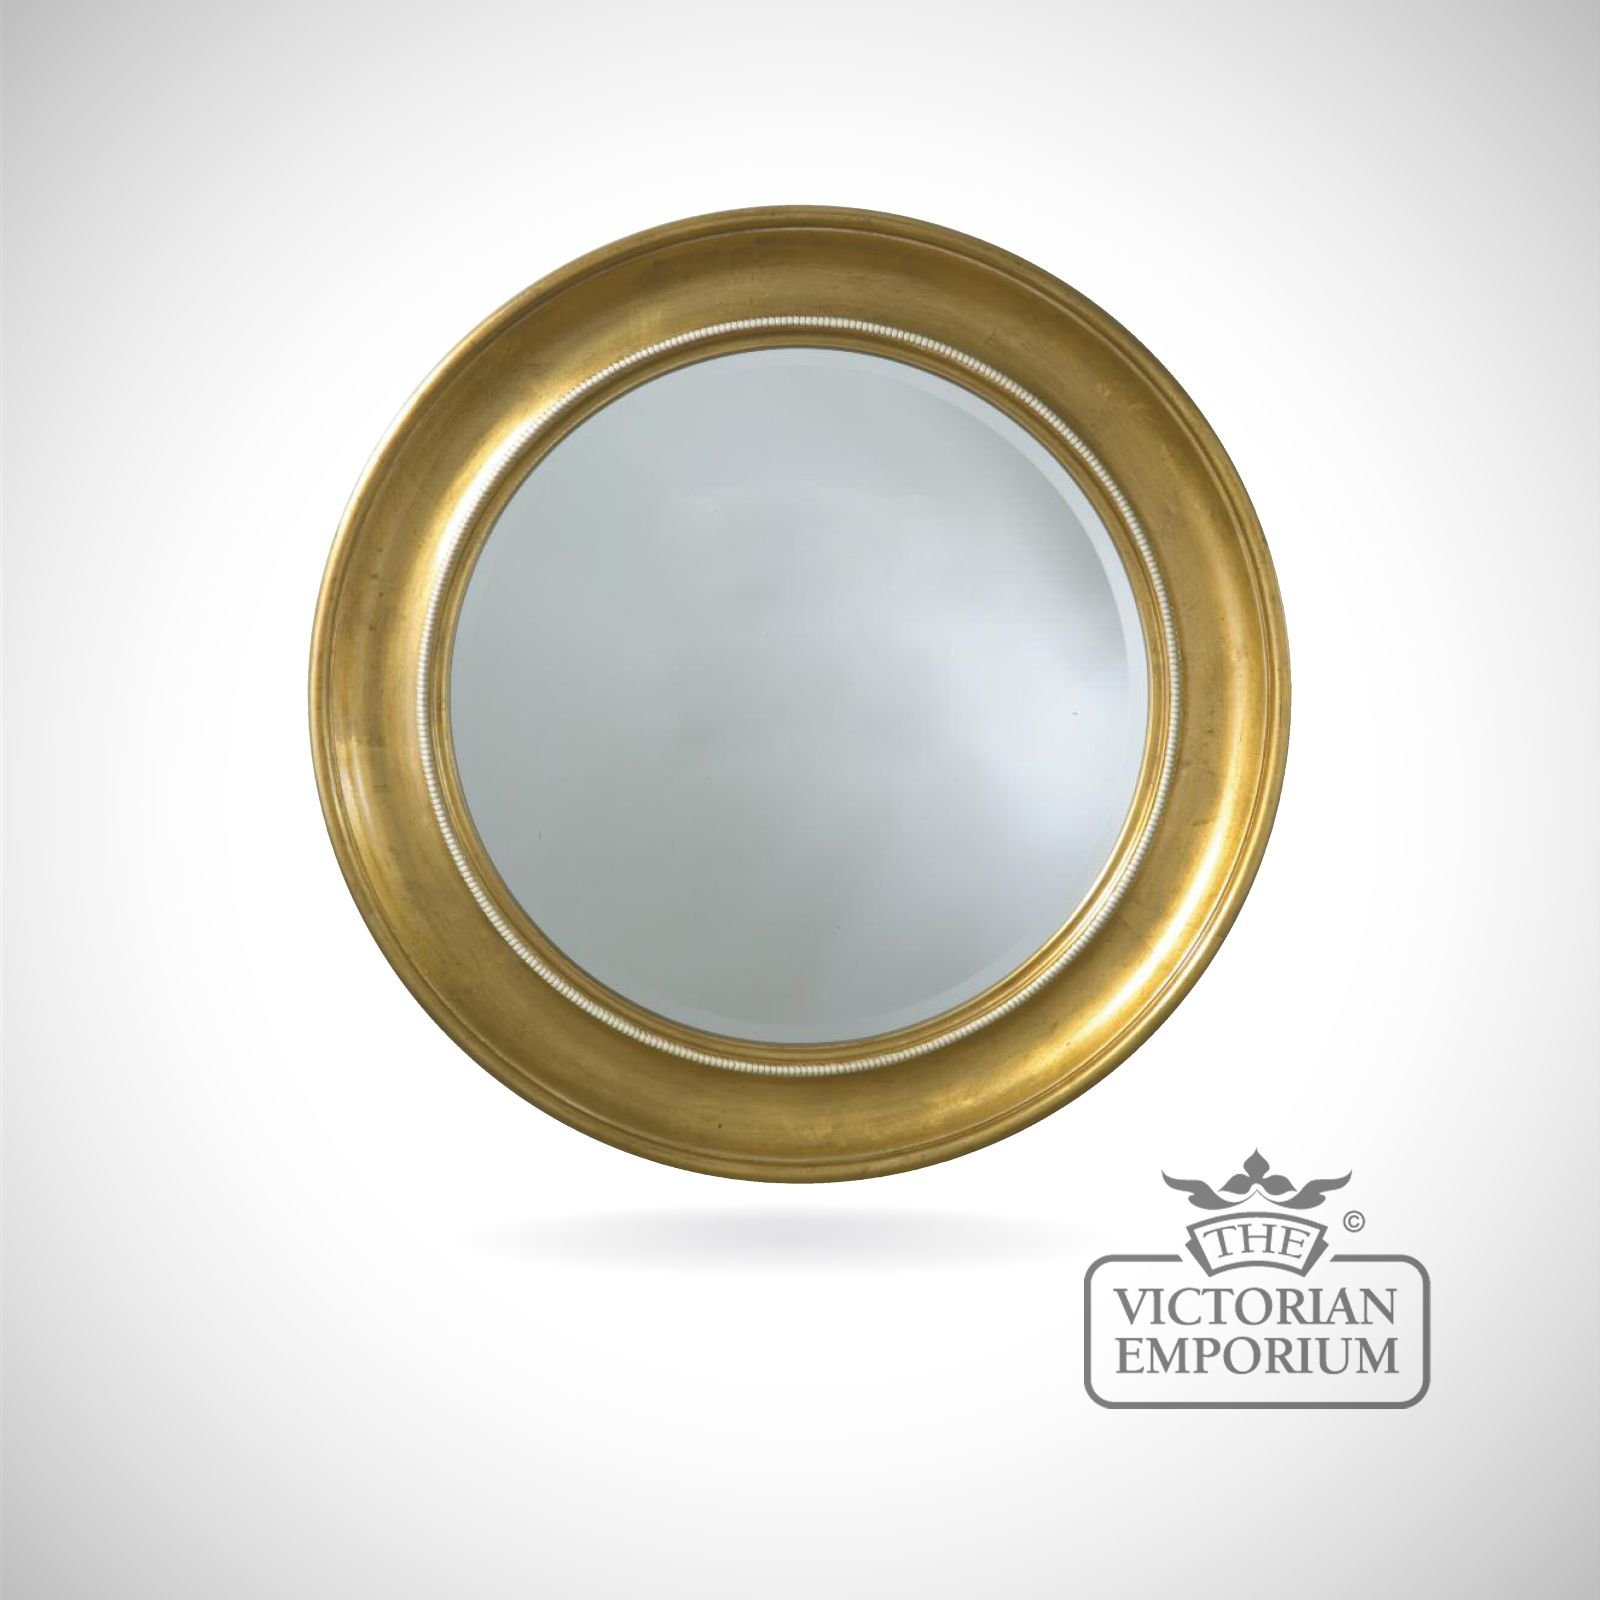 London mirror with decorative gold circular frame - 91cm diameter